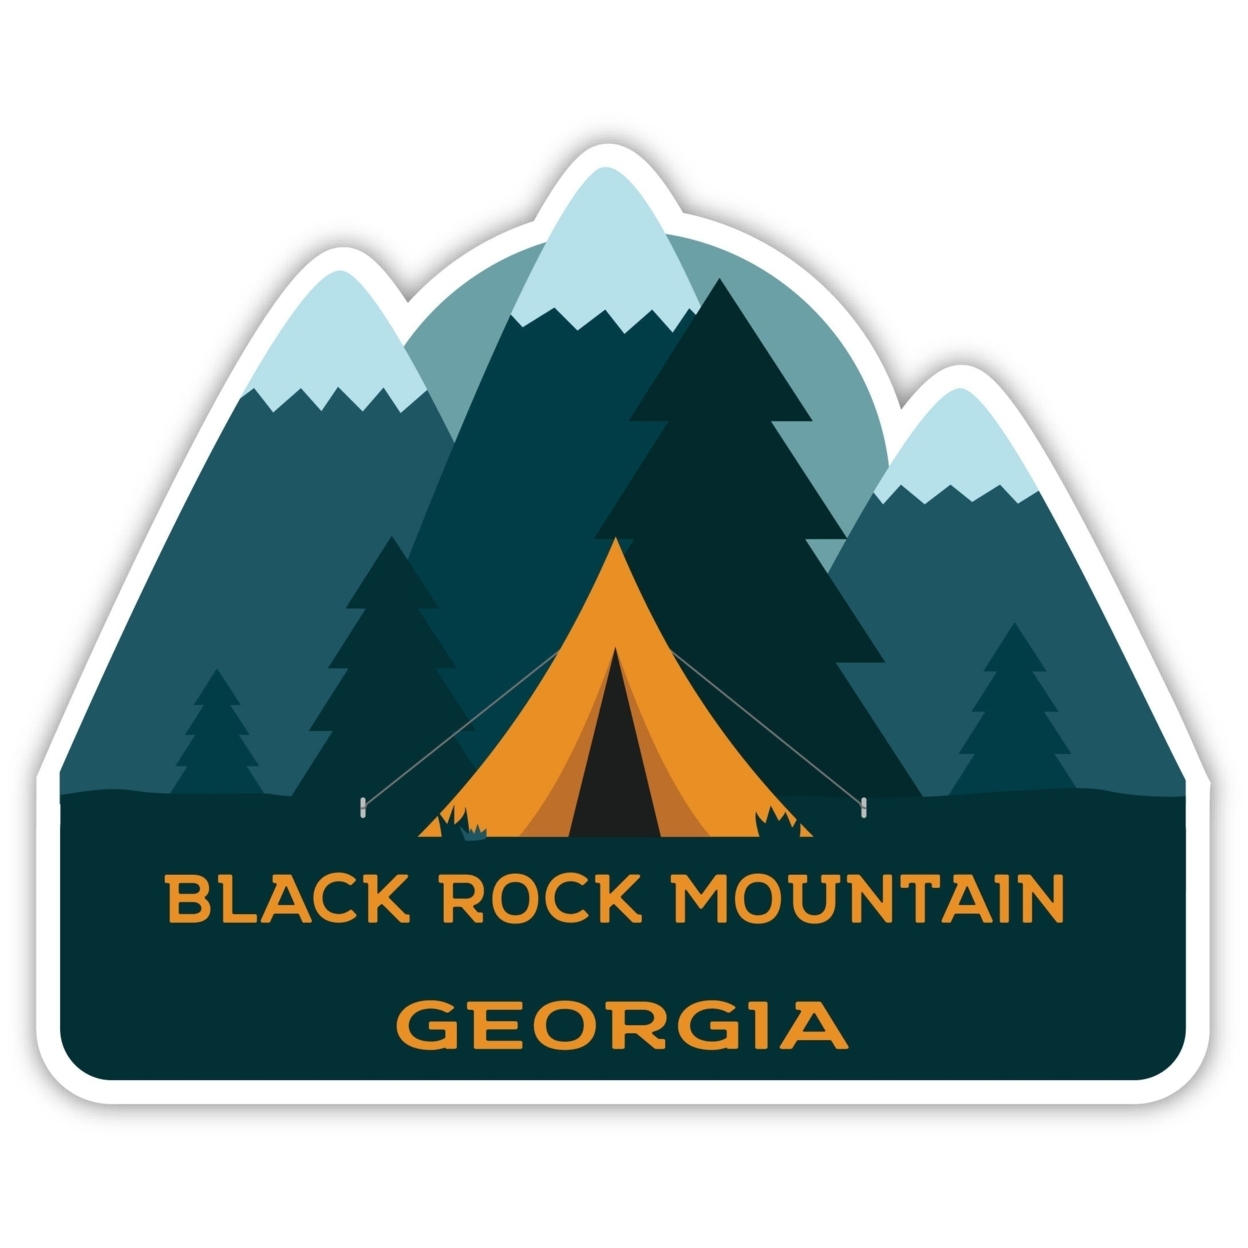 Black Rock Mountain Georgia Souvenir Decorative Stickers (Choose Theme And Size) - Single Unit, 6-Inch, Tent